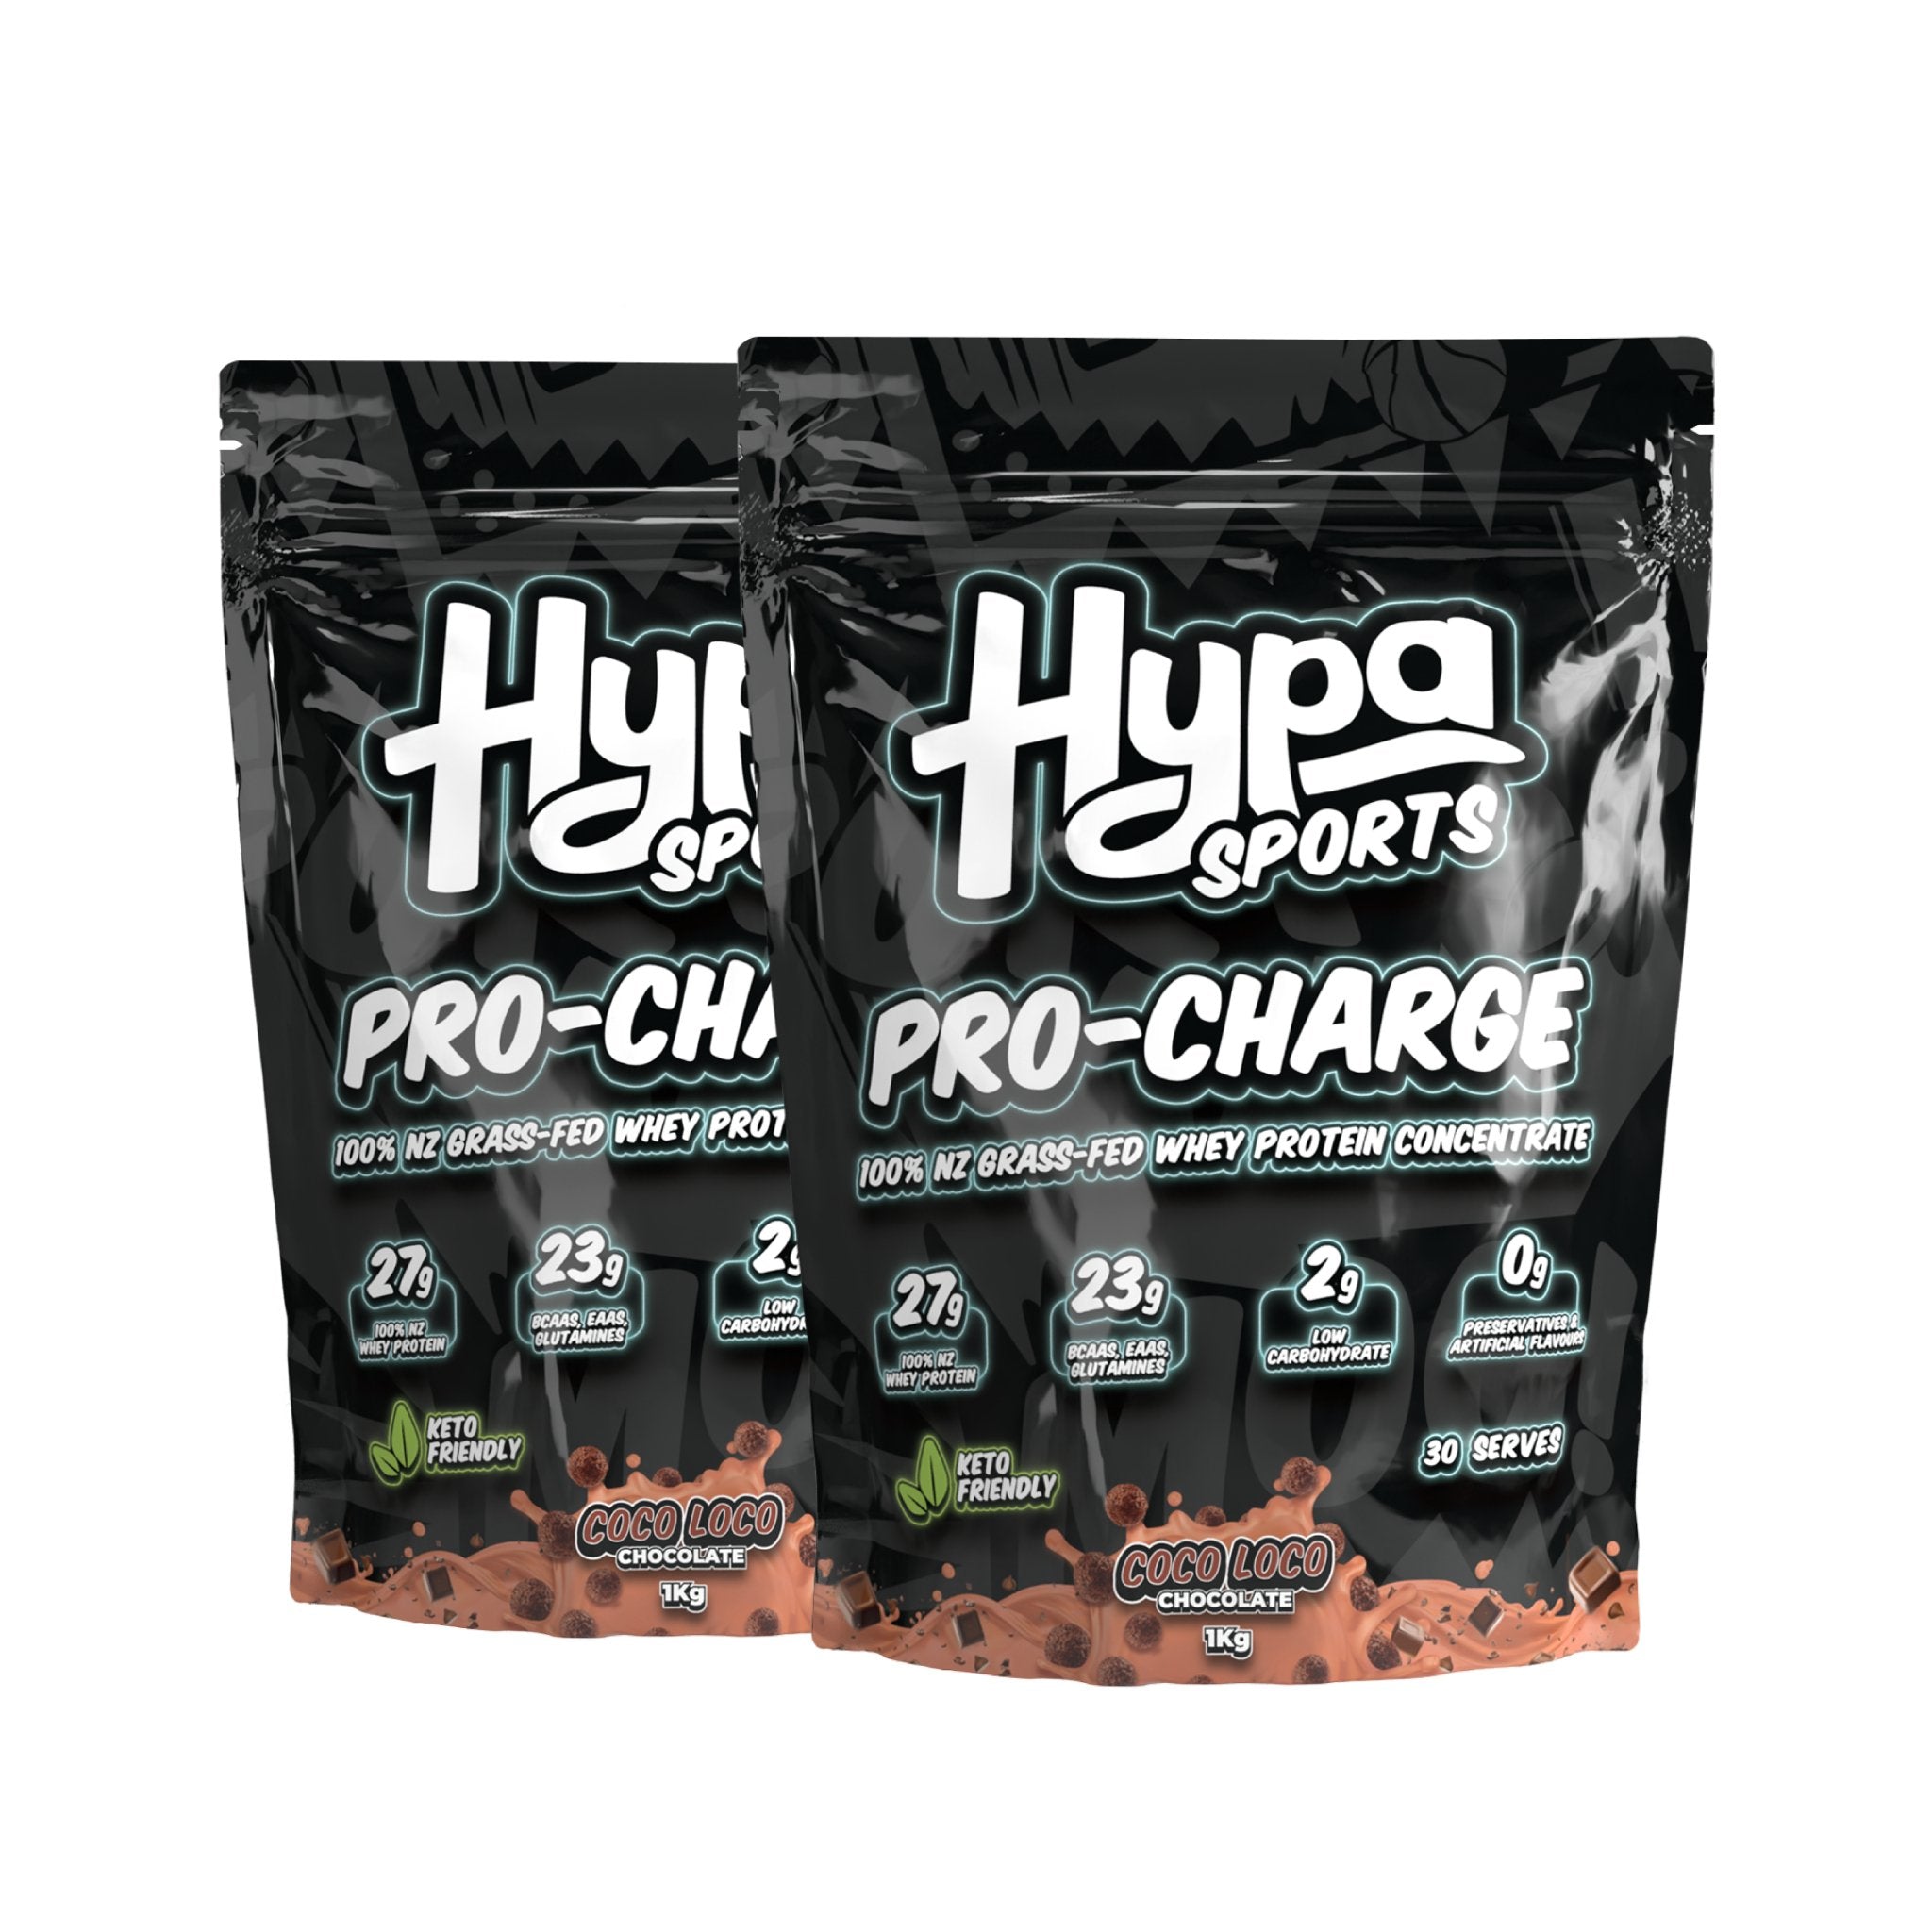 2 x Hypa Sports Pro-Charge - Hypa Christchurch - Hypa Sports